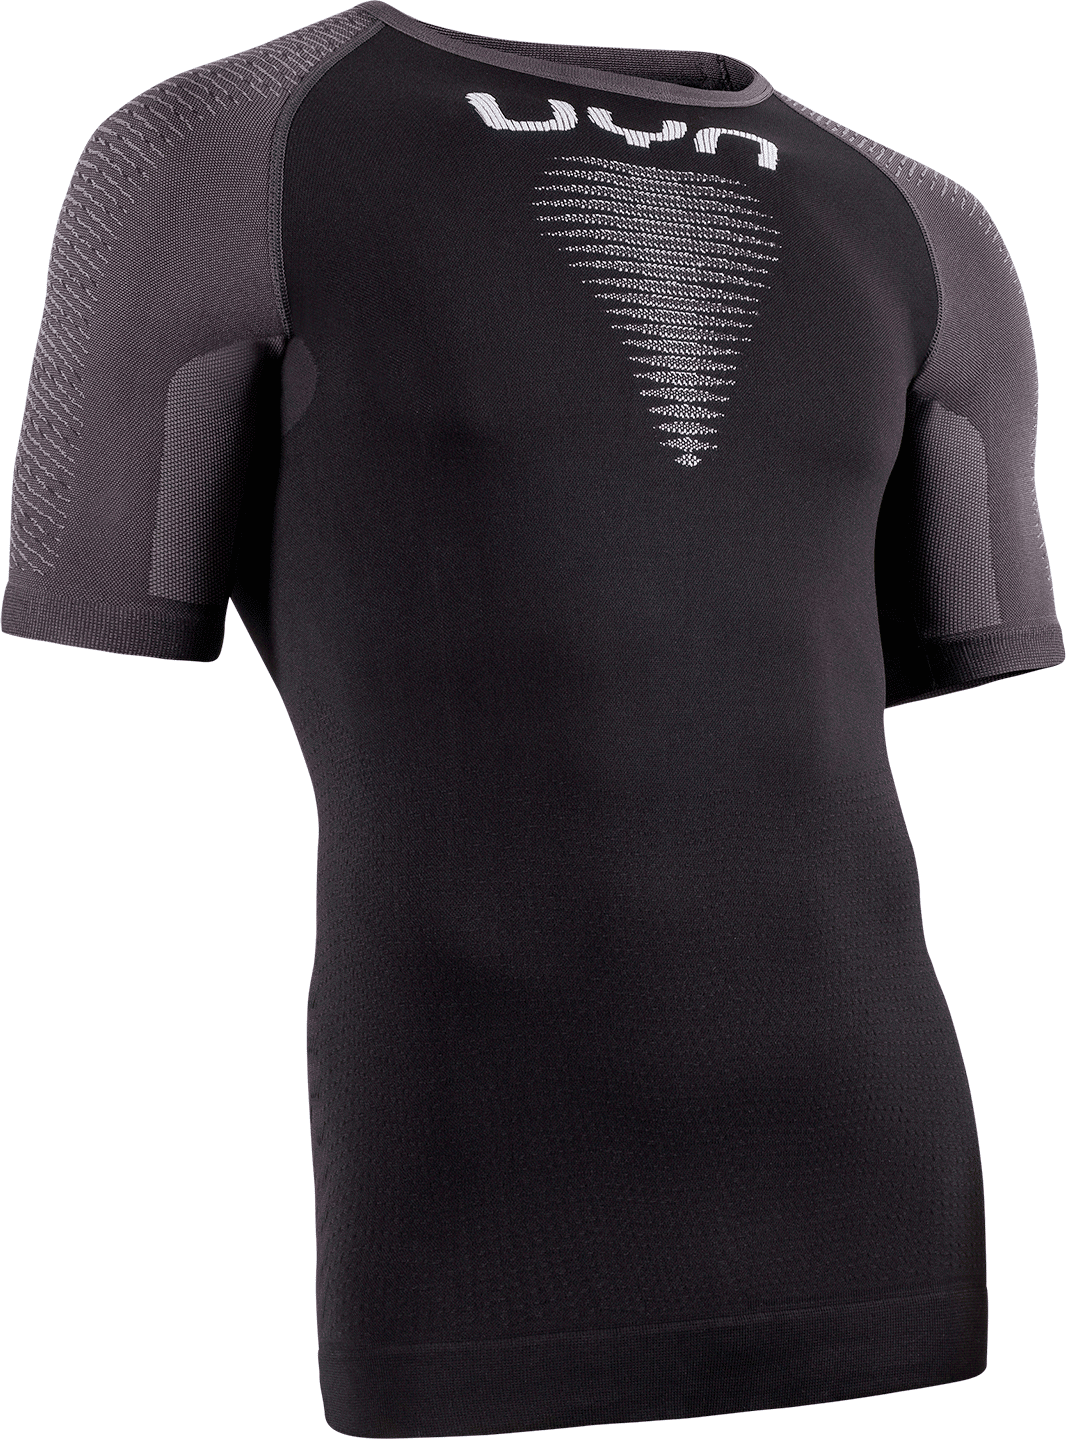 Uyn Marathon - Camiseta - Hombre